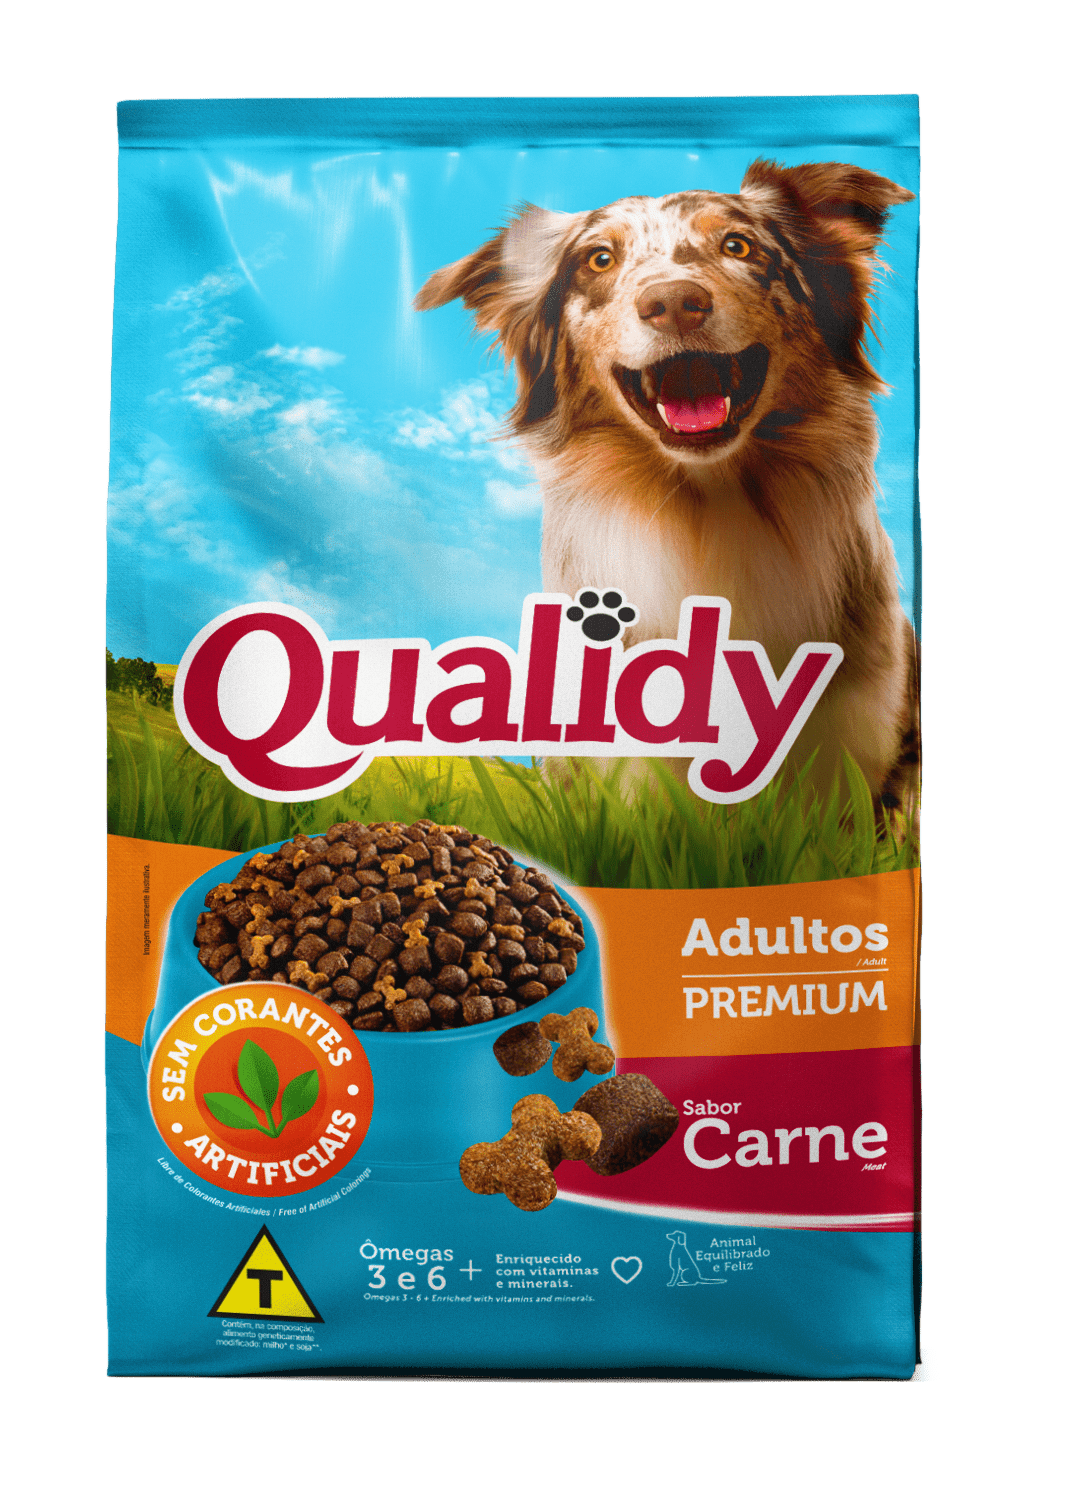 Qualidy Premium Adult Dogs Beef flavor